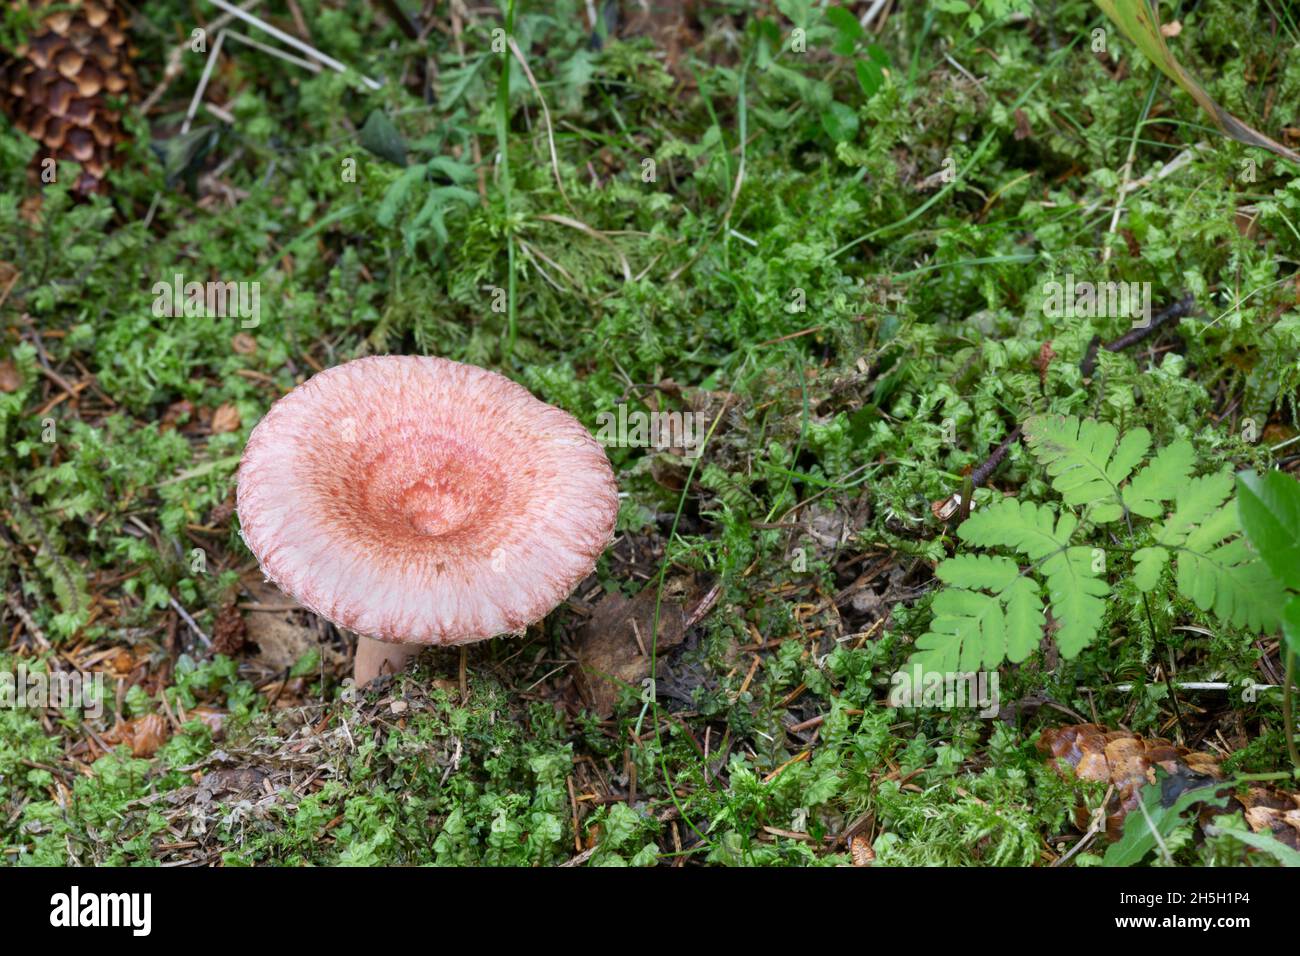 Woolly miolkcap, Lactarius torminosus growing among moss, this mushrooms is edible Stock Photo